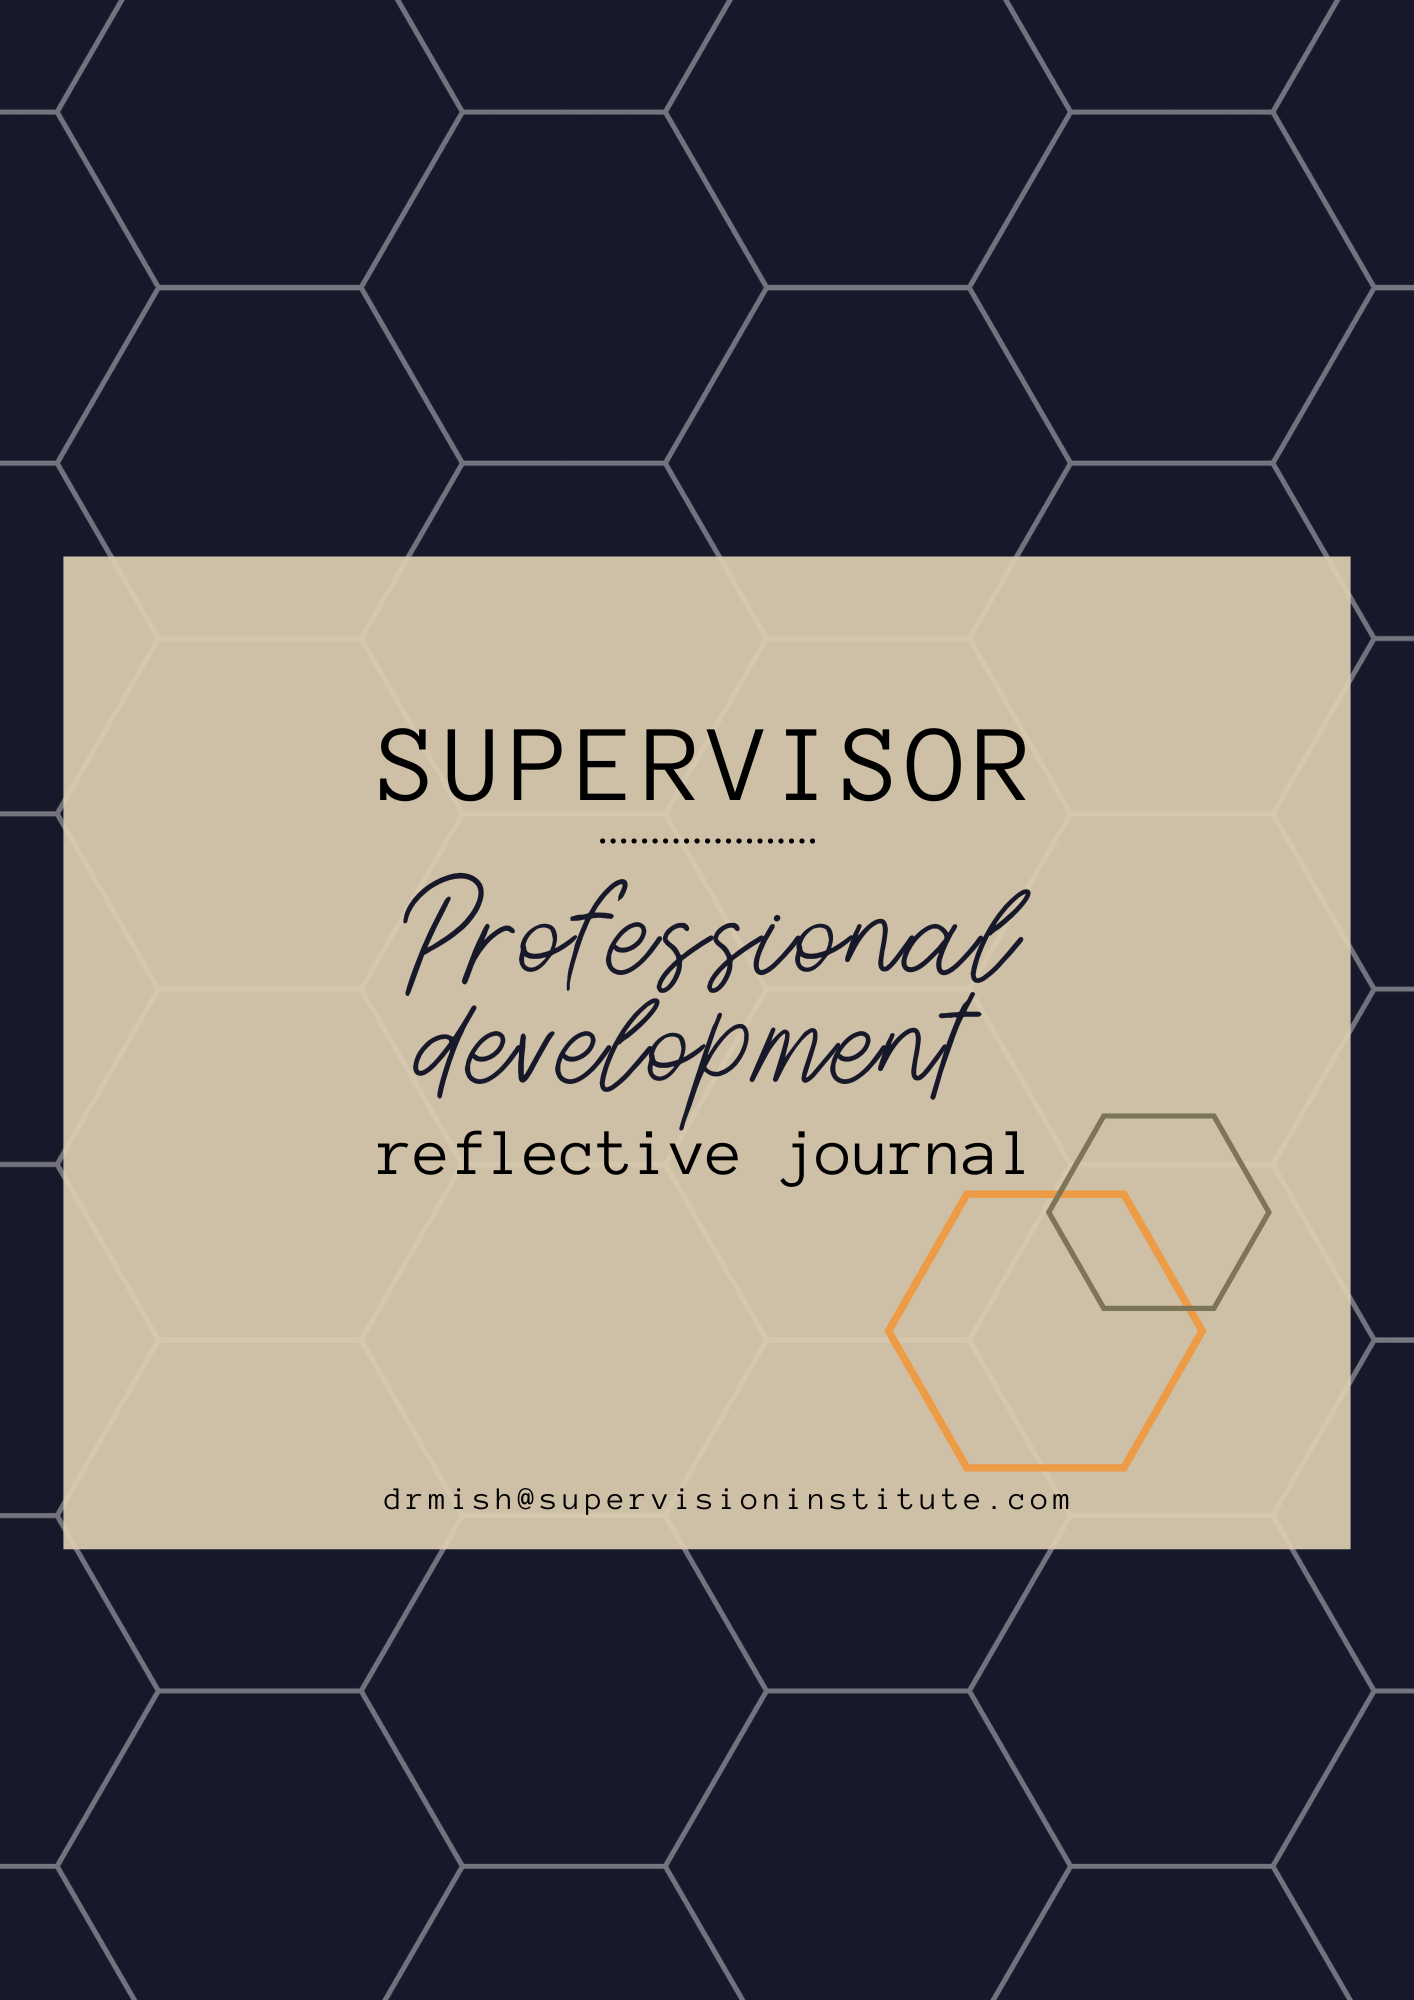 Supervisor professional development reflective journal